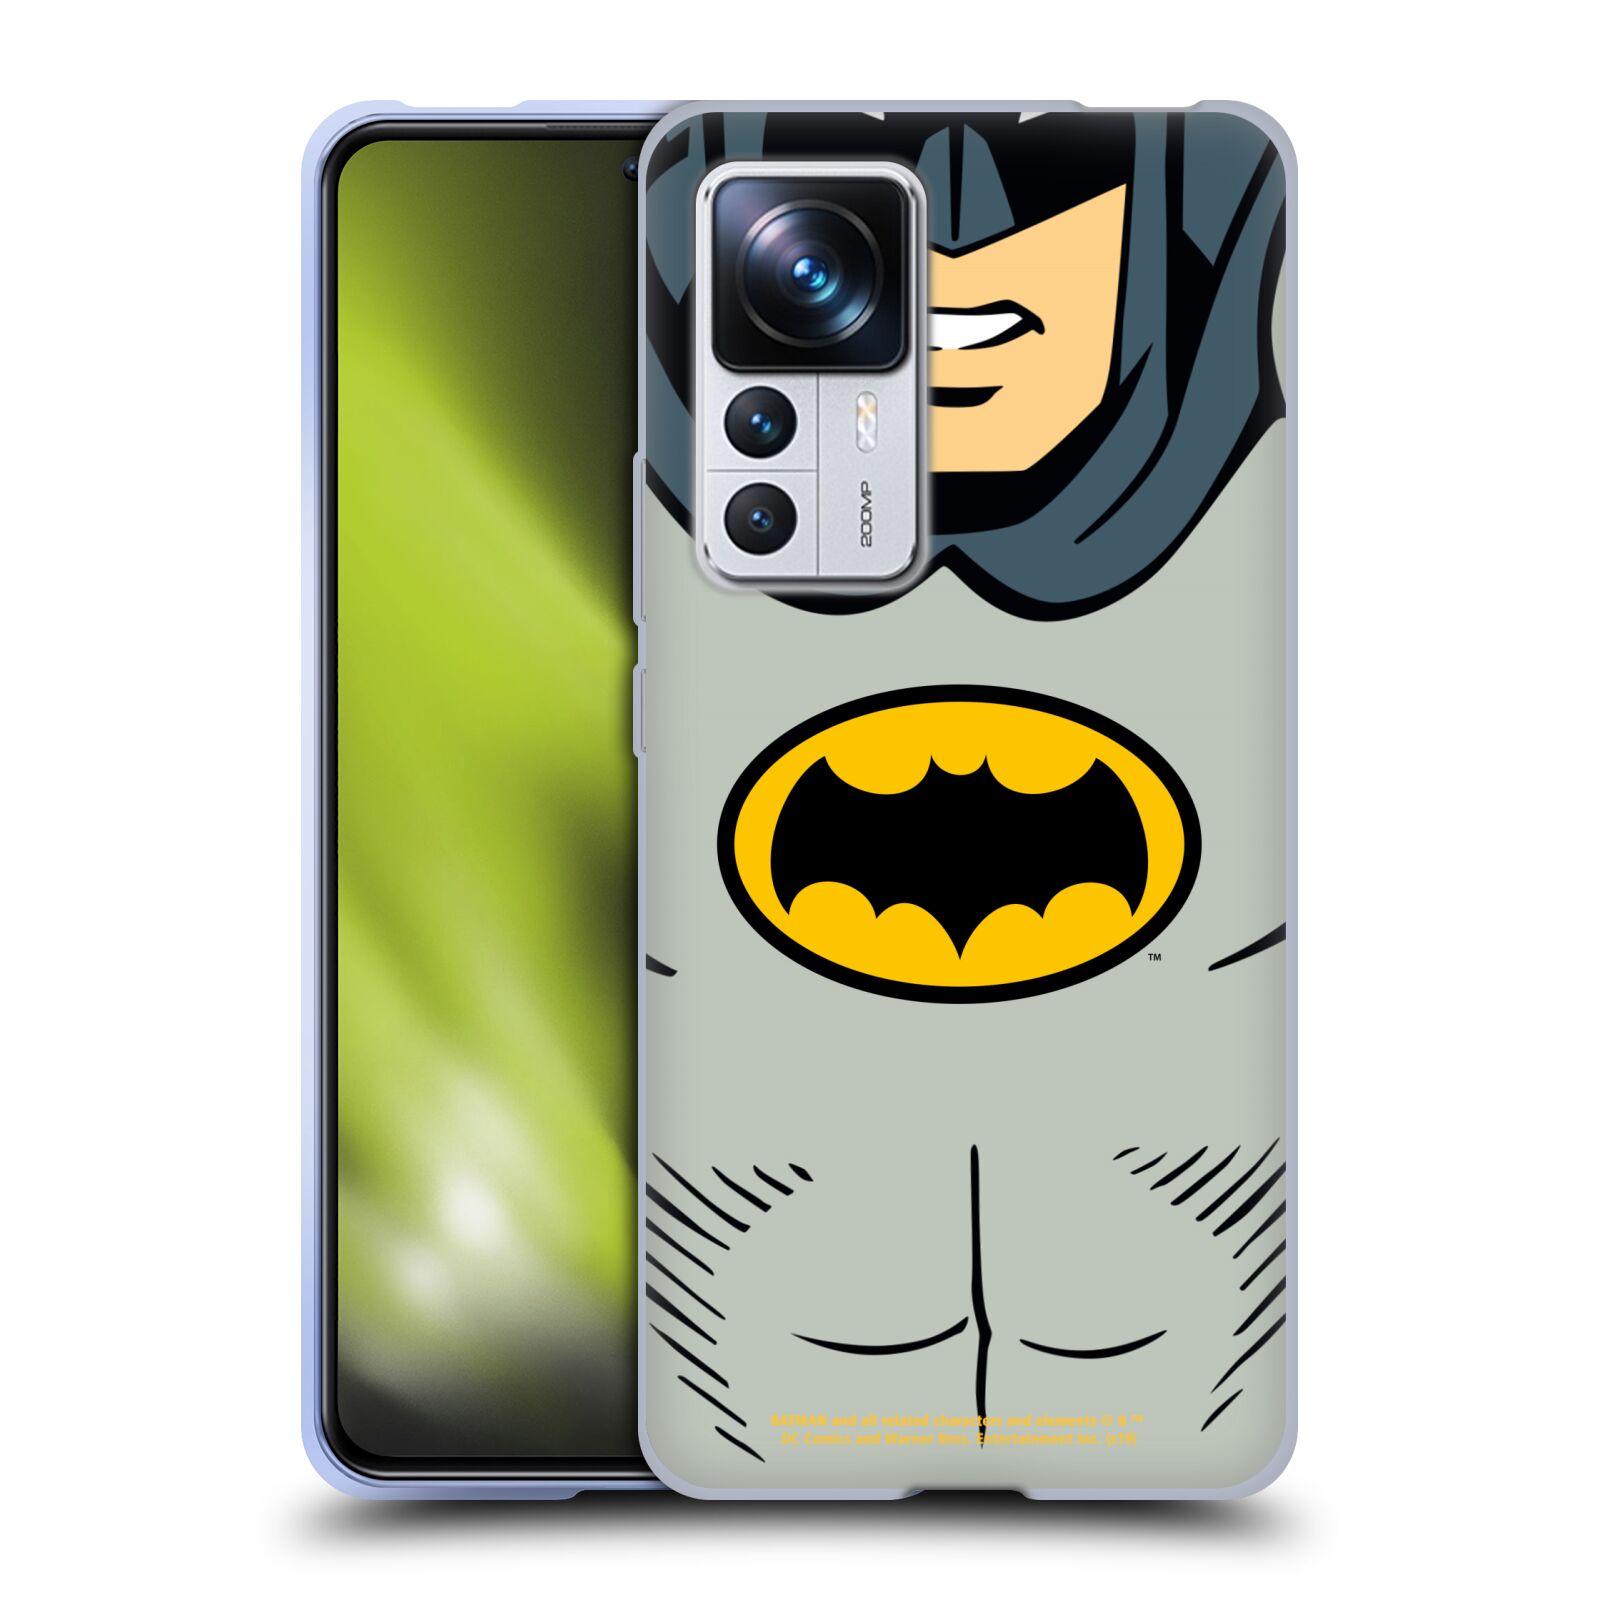 Silikonové pouzdro na mobil Xiaomi 12T / 12T Pro - Batman (Silikonový kryt, obal, pouzdro na mobilní telefon Xiaomi 12T / 12T Pro s licencovaným motivem Batman)